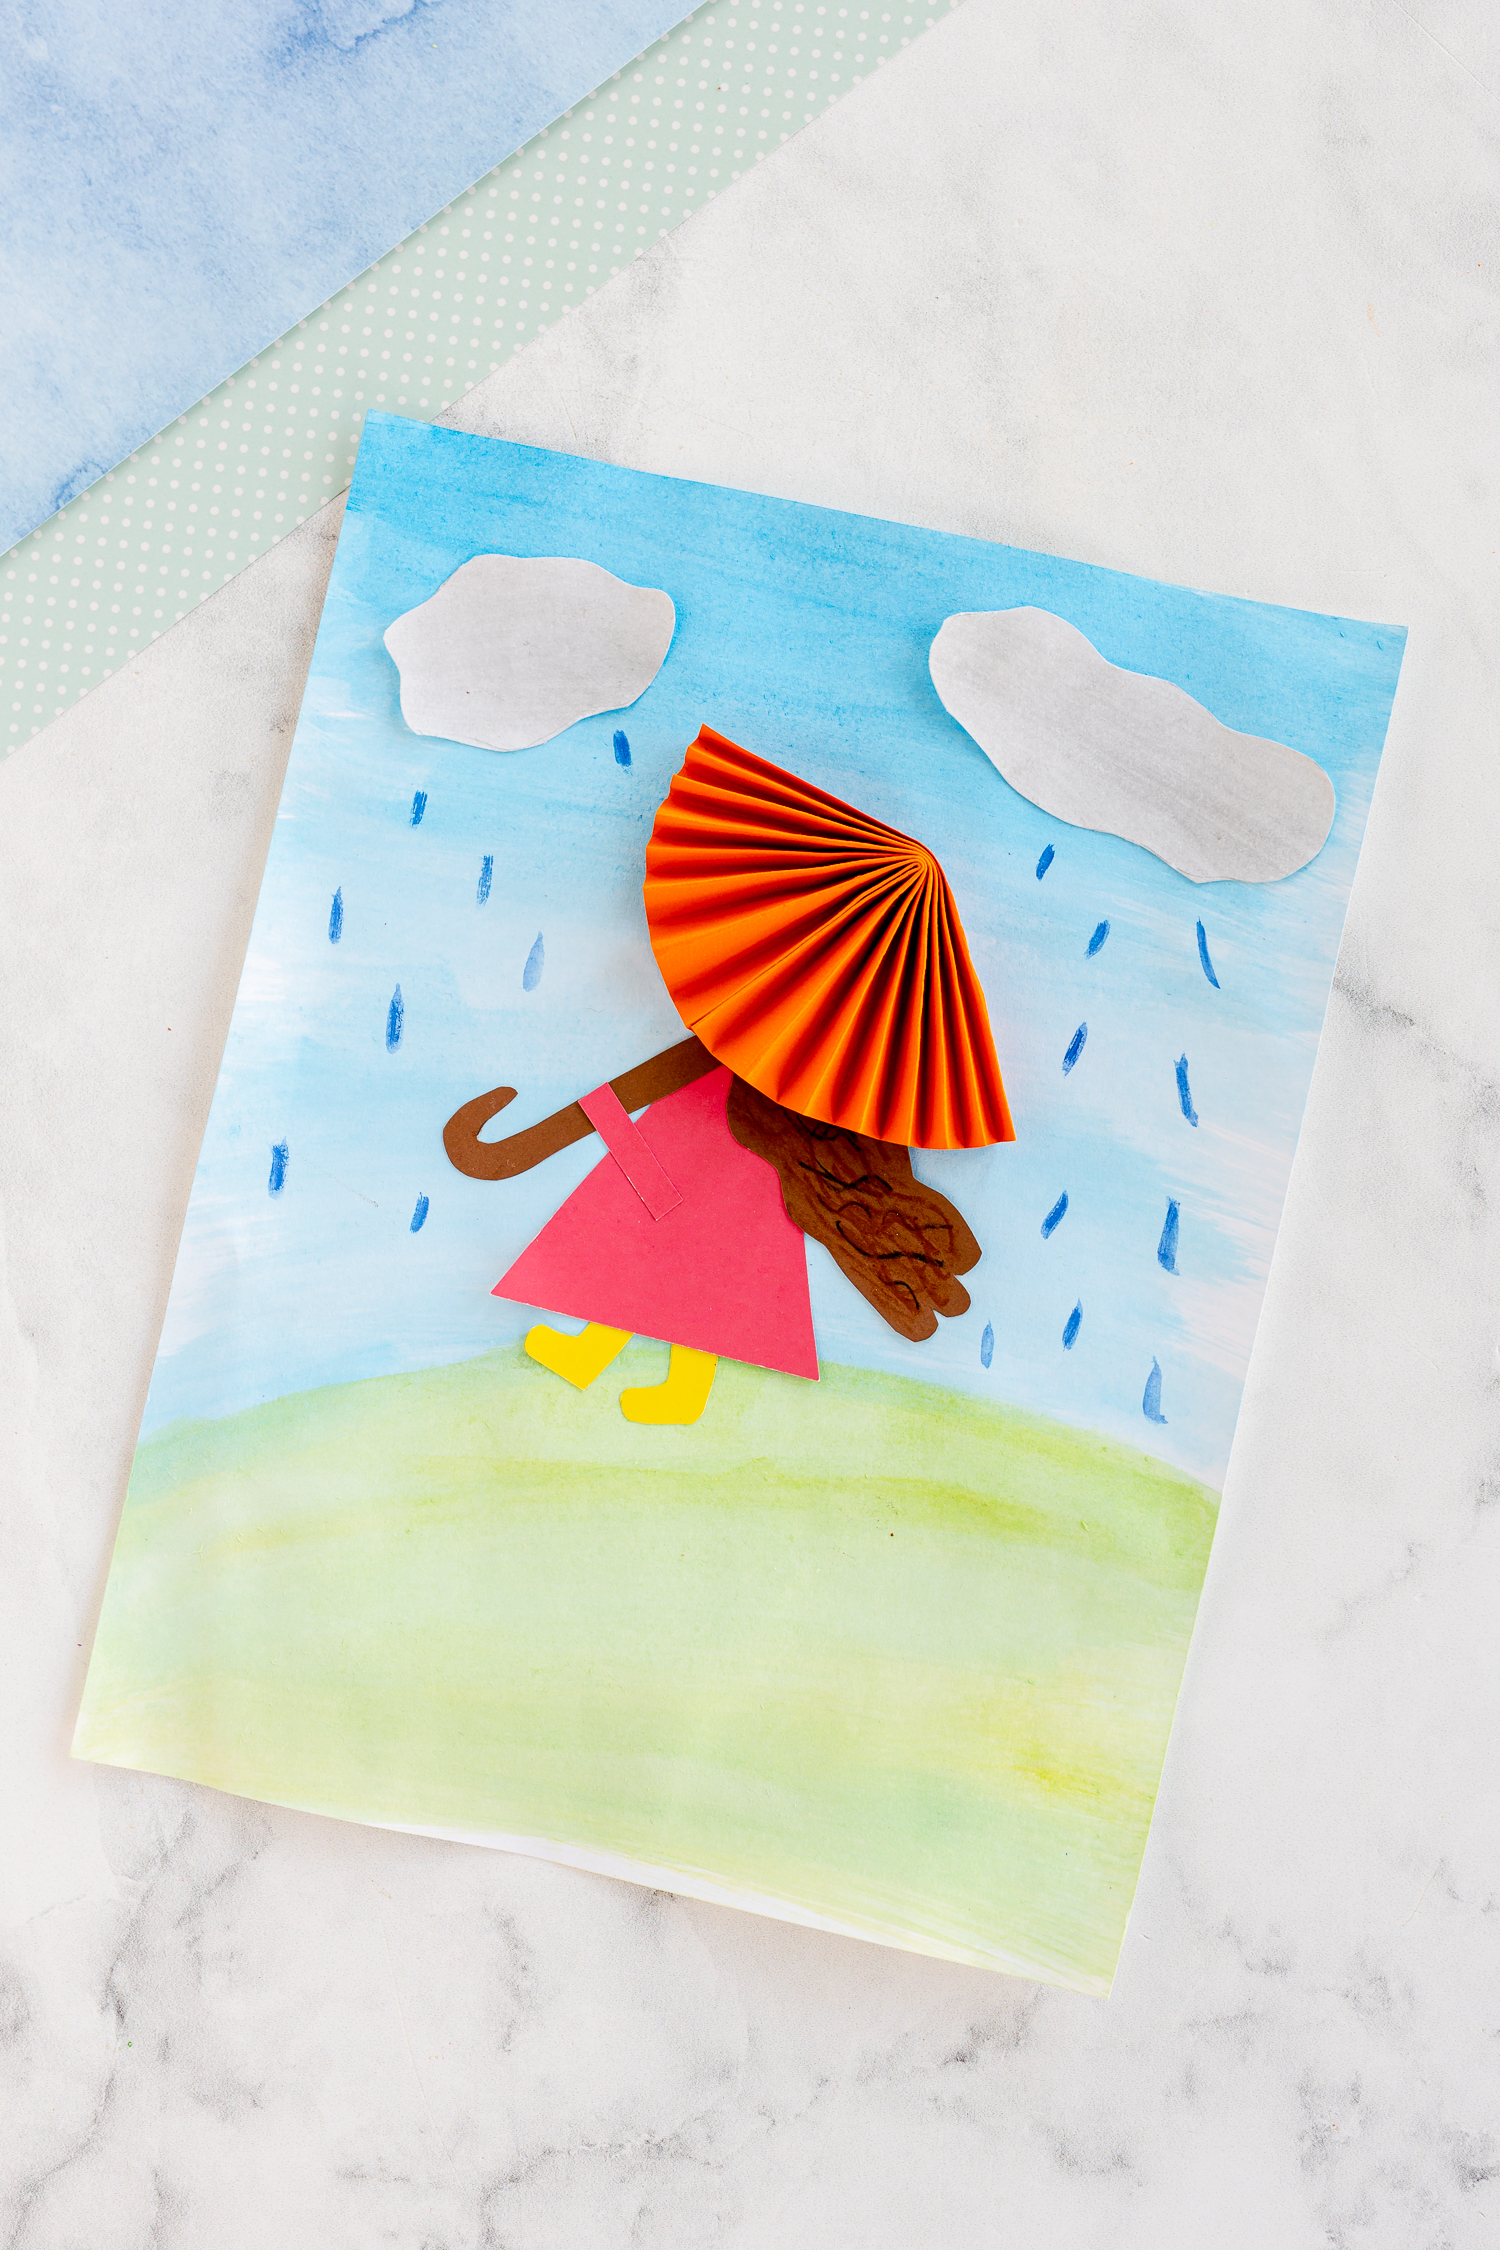 Rainy Day Paper Umbrella Craft